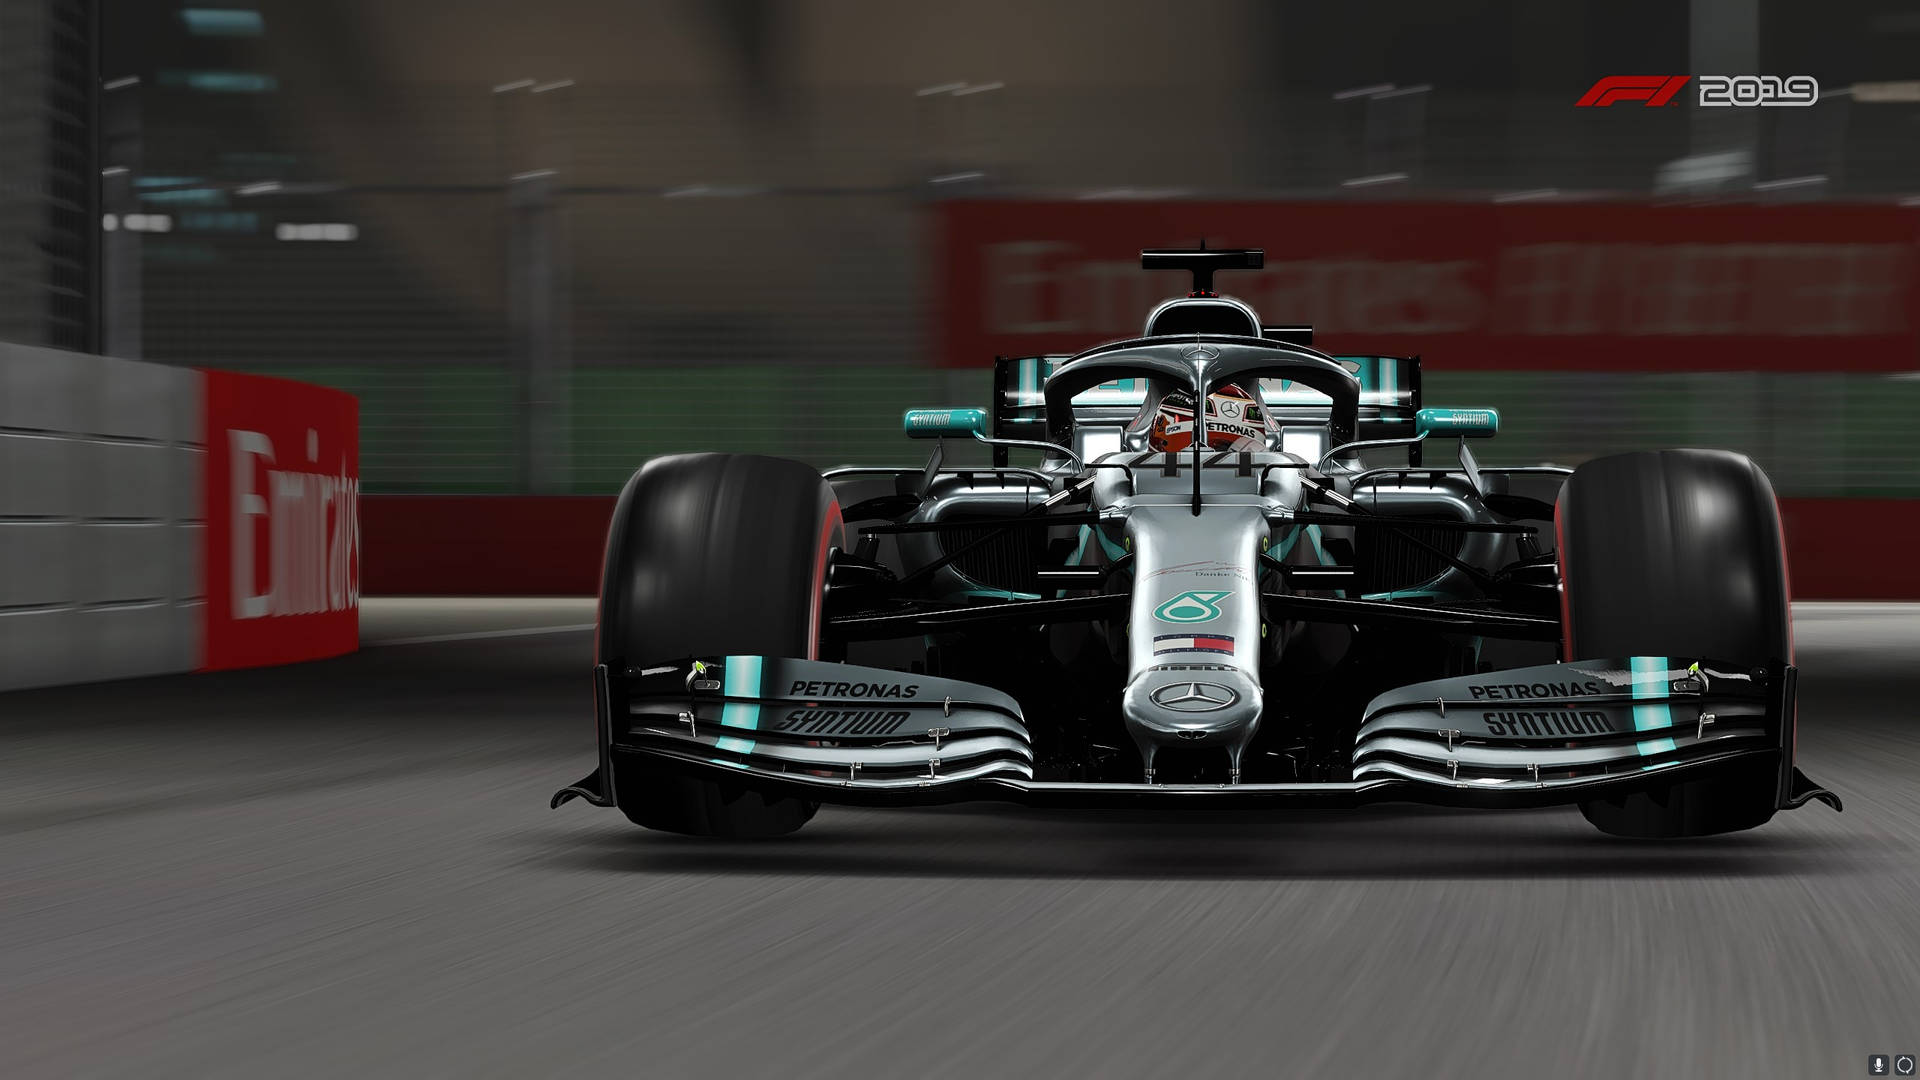 Mercedes' Car In F1 2019 Background